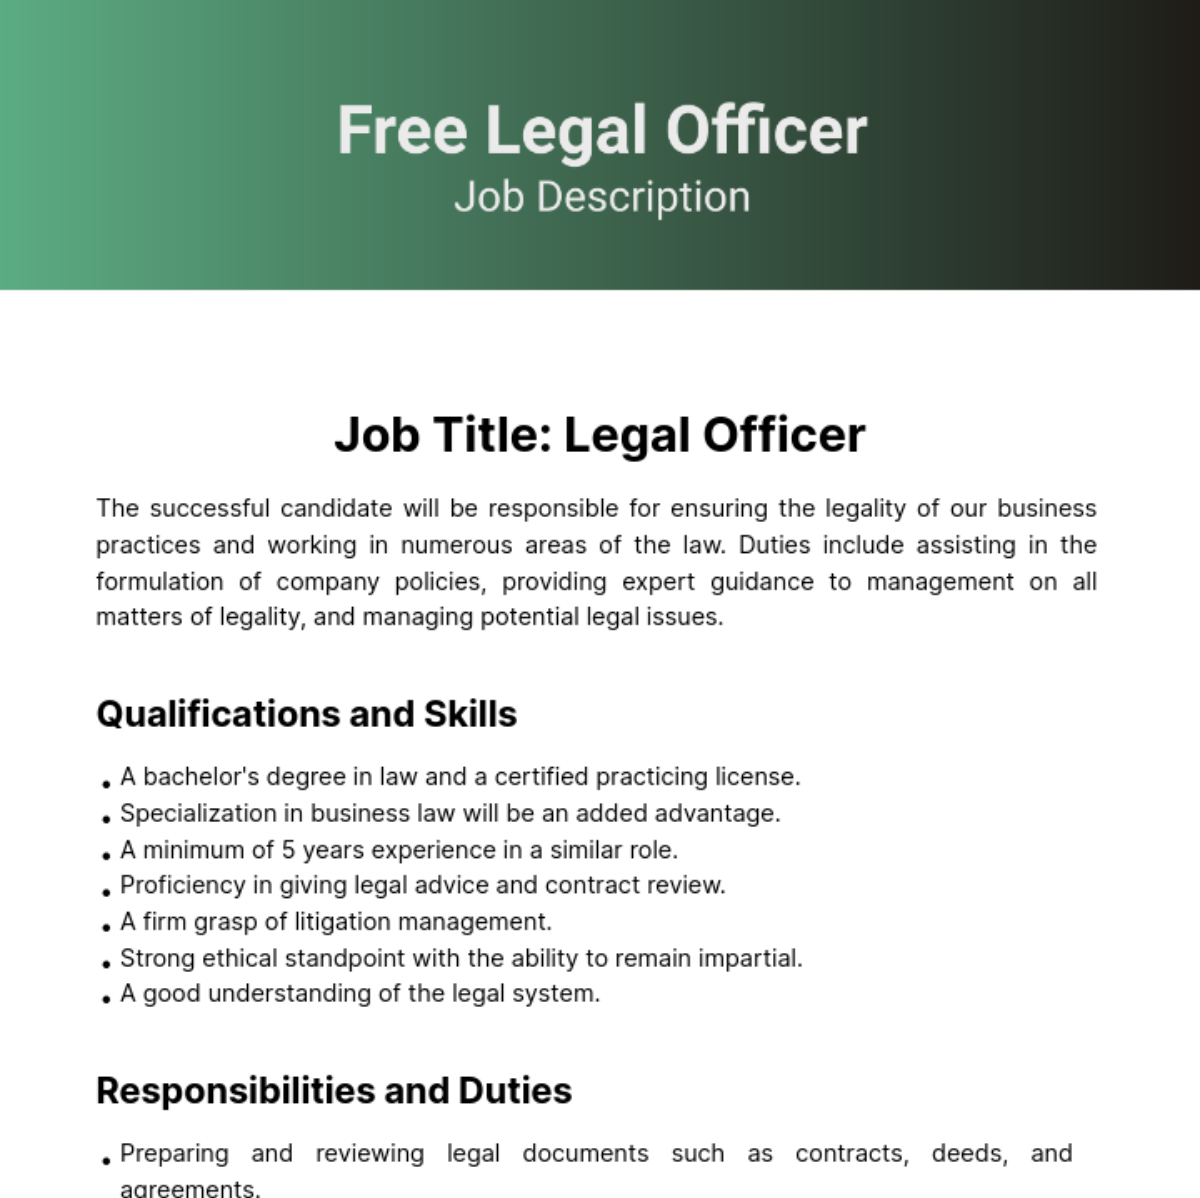 Free Legal Officer Job Description Template